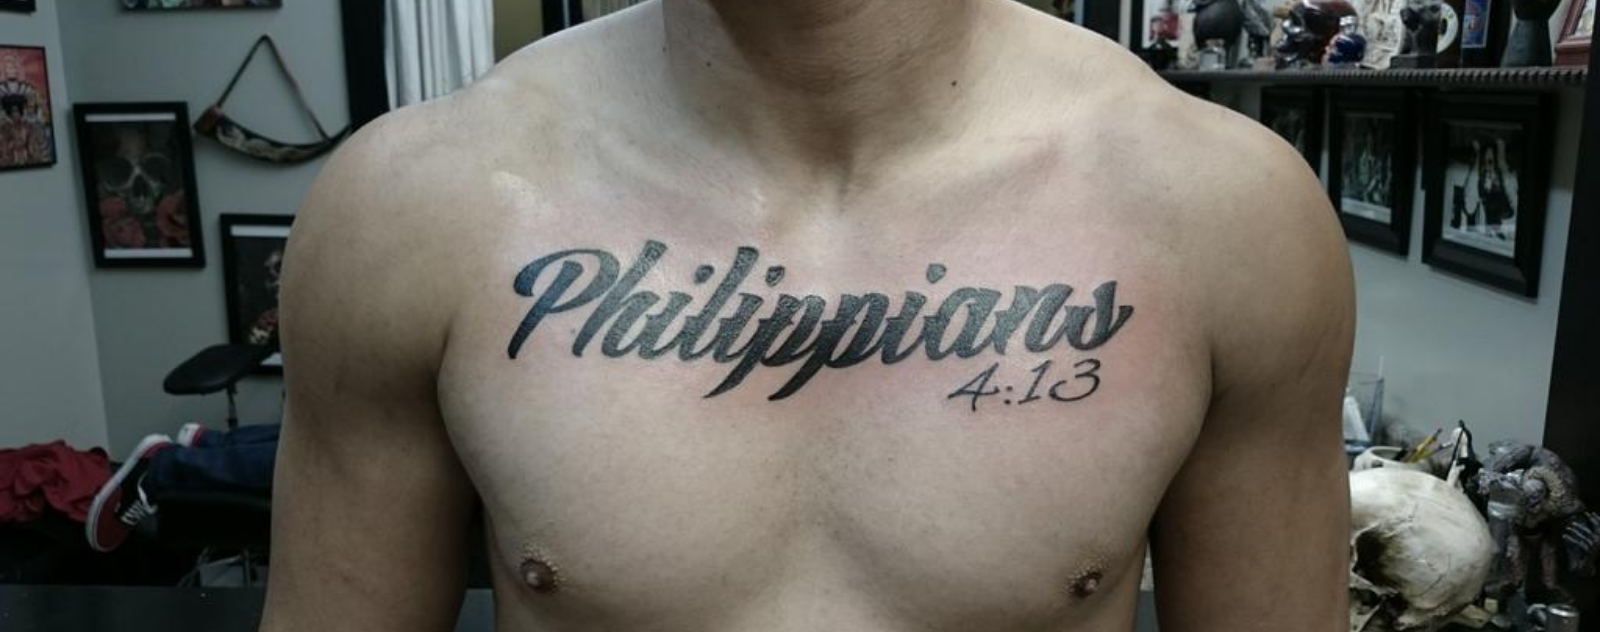 philippians-4-13-tattoo-chest-10